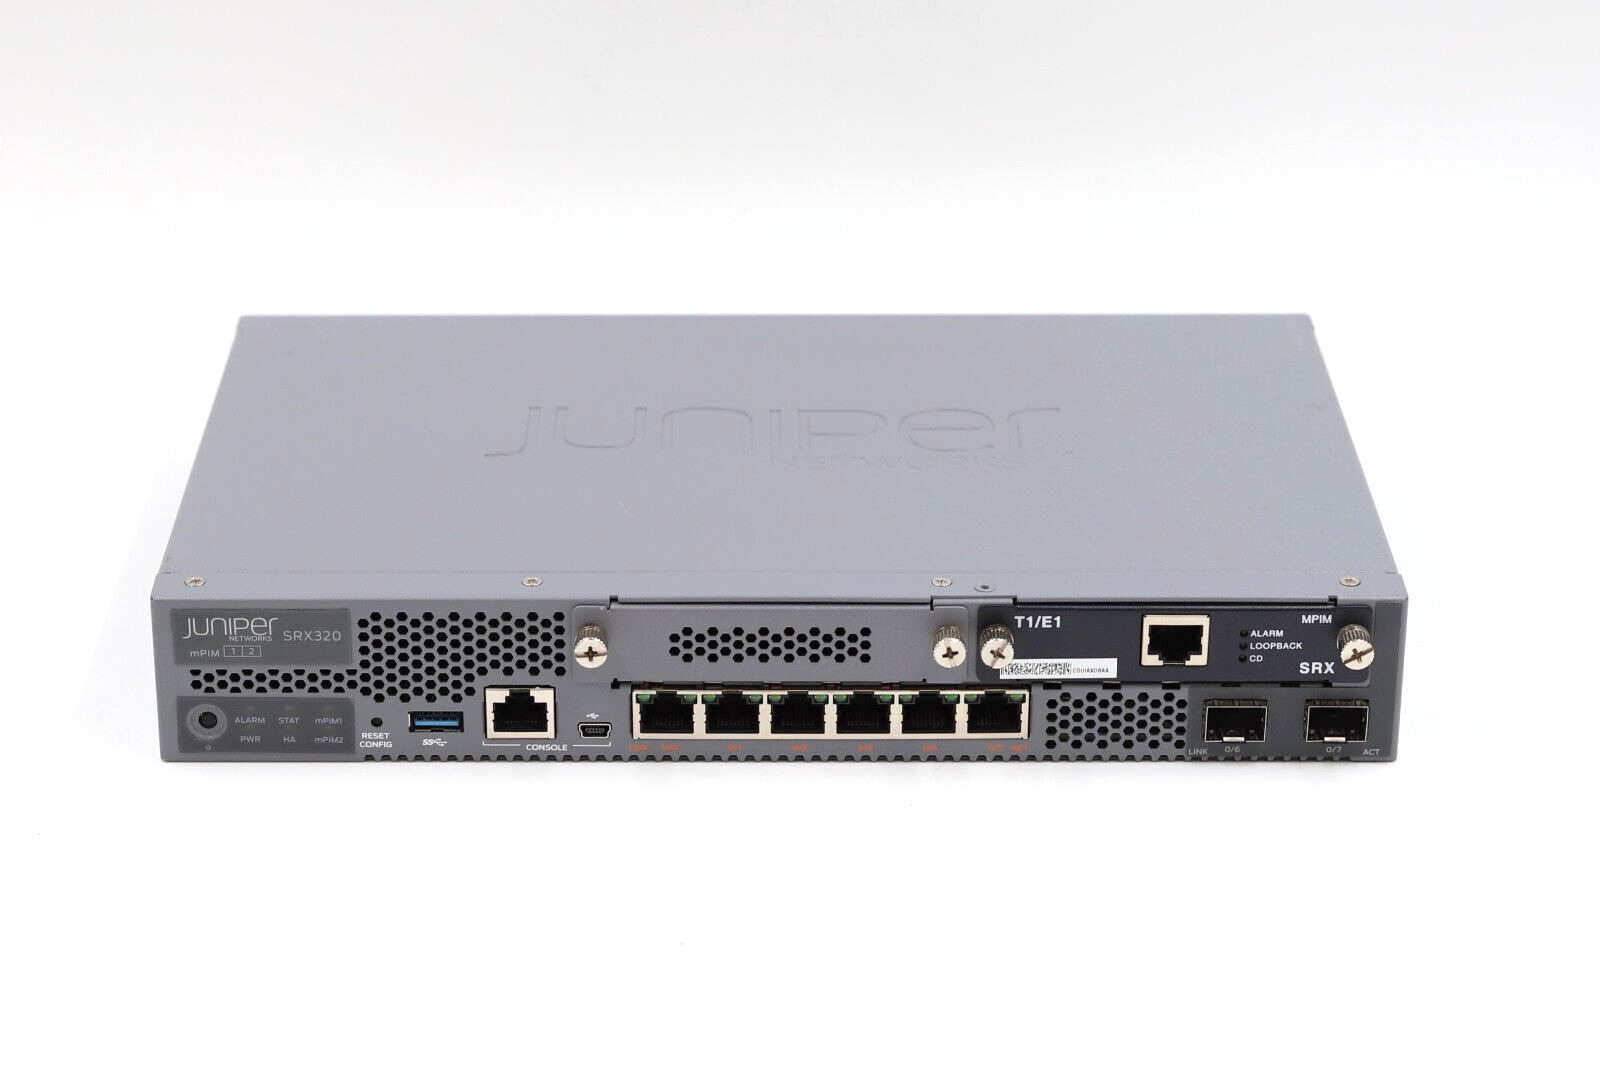 Juniper Networks SRX320-POE 6-Port Service Gateway Security Appliance Tested